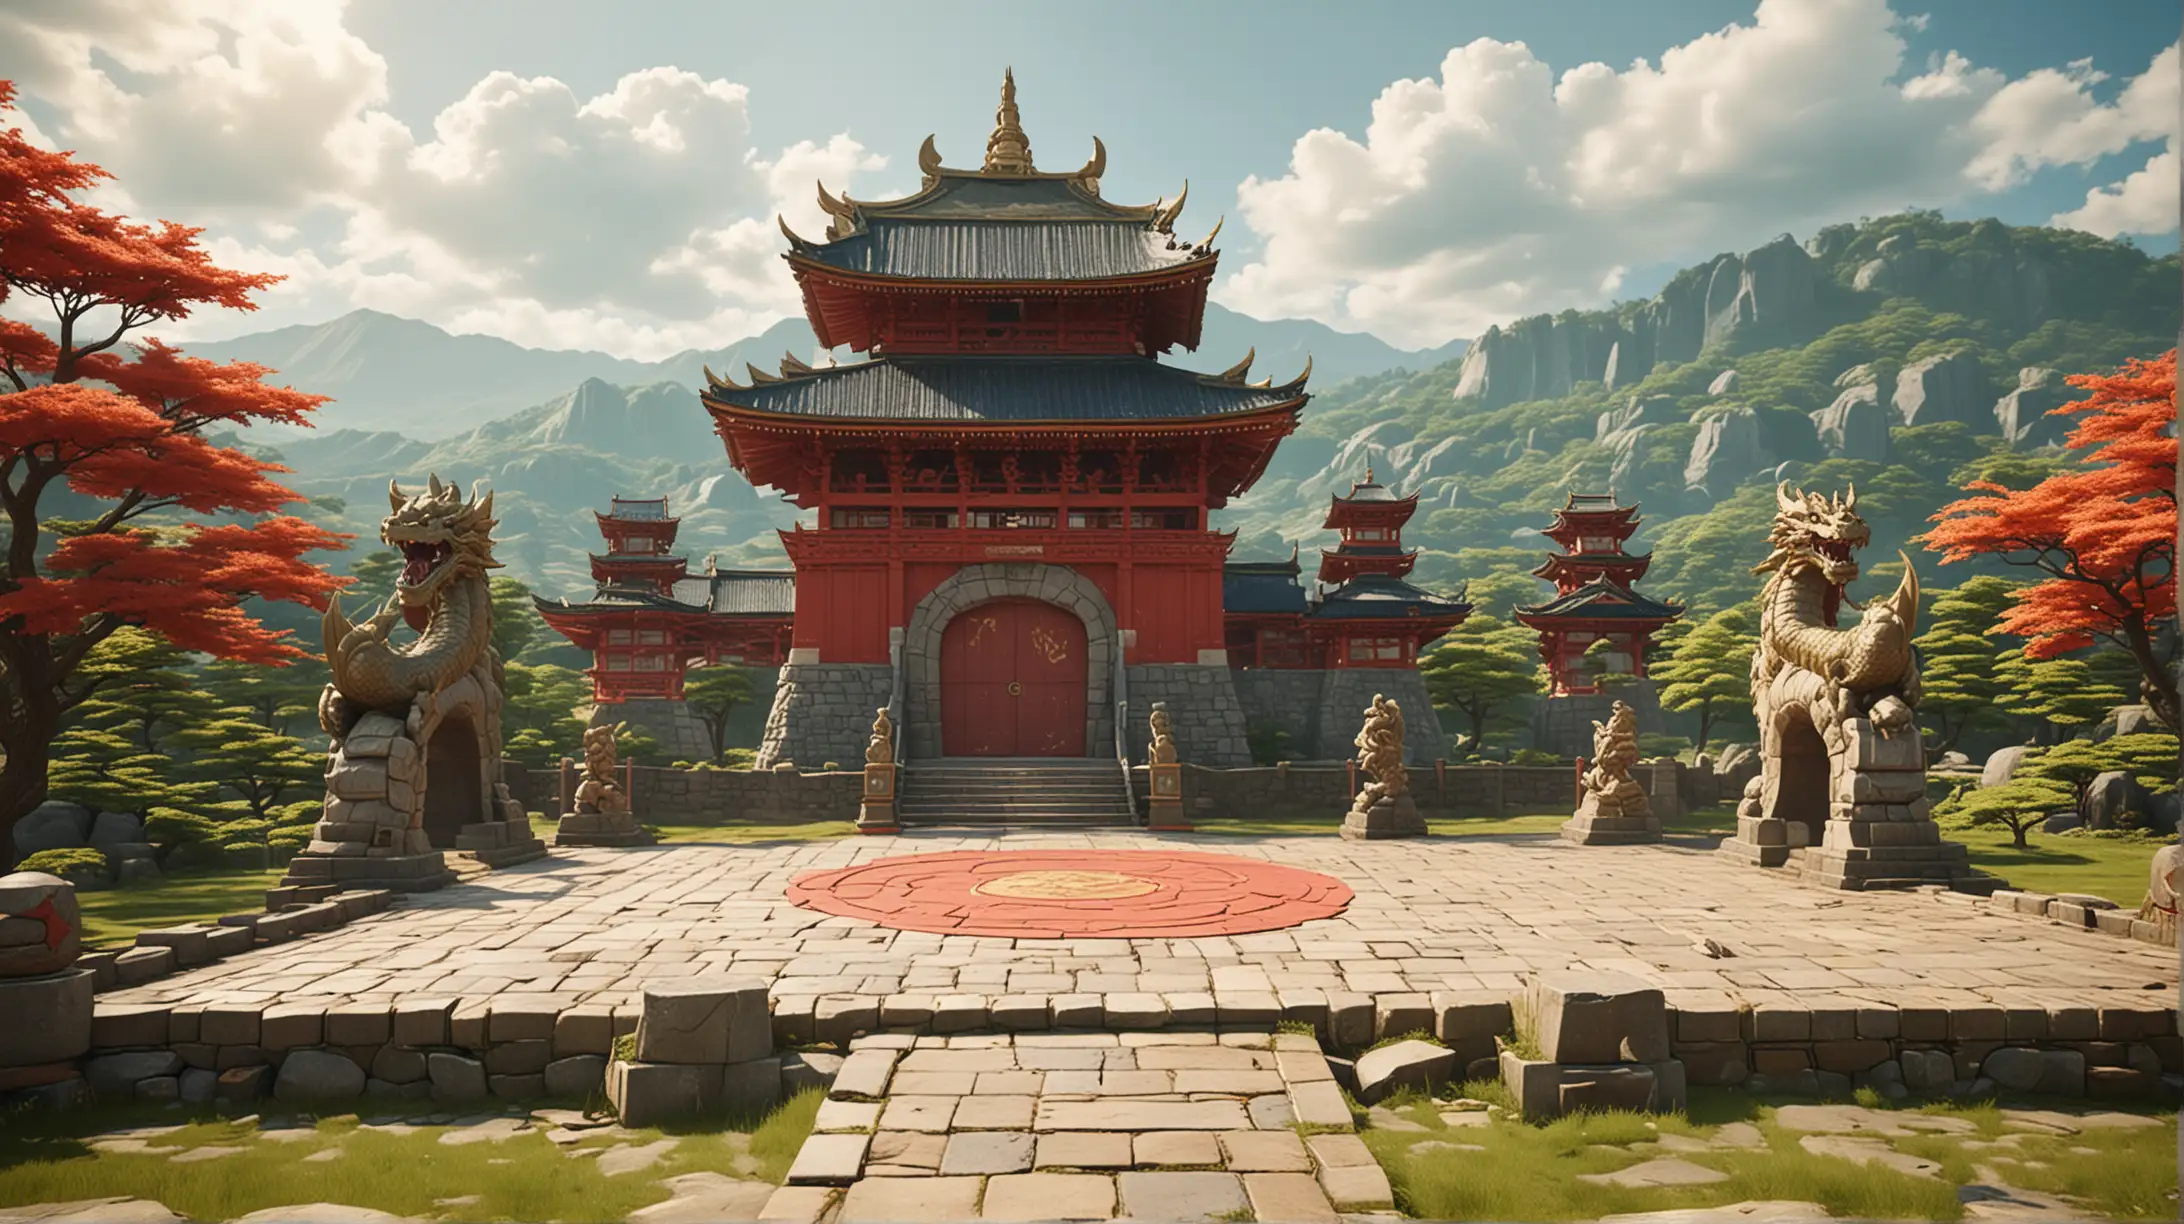 Dragon Stone Martial Arts Arena in Japanese Castle Landscape